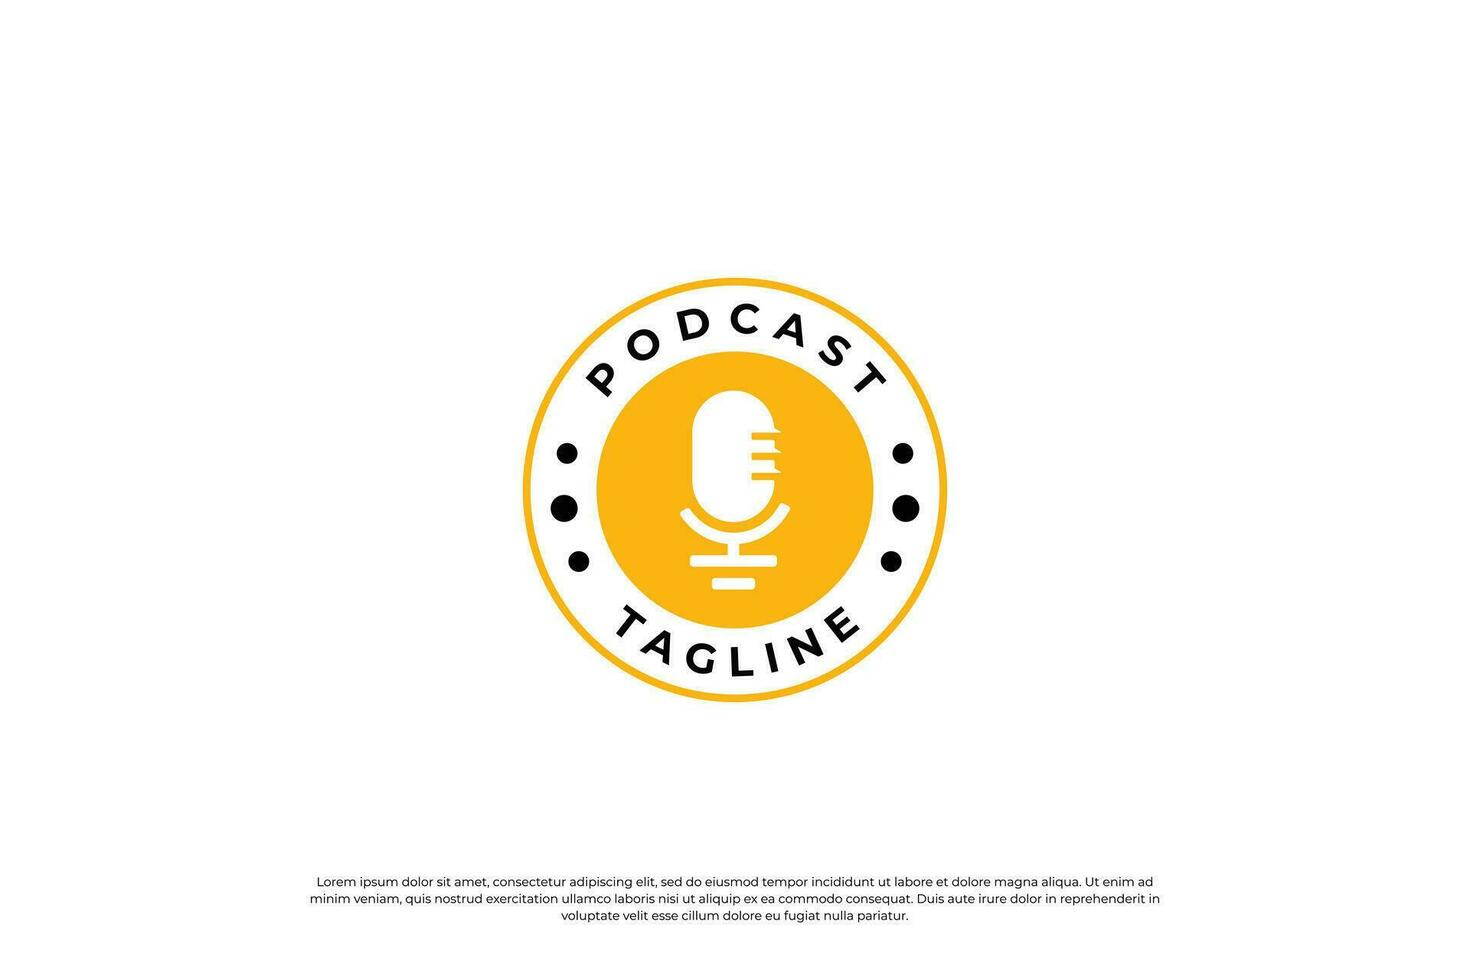 vintage podcast distintivo, emblema, rótulo logotipo Projeto. vetor